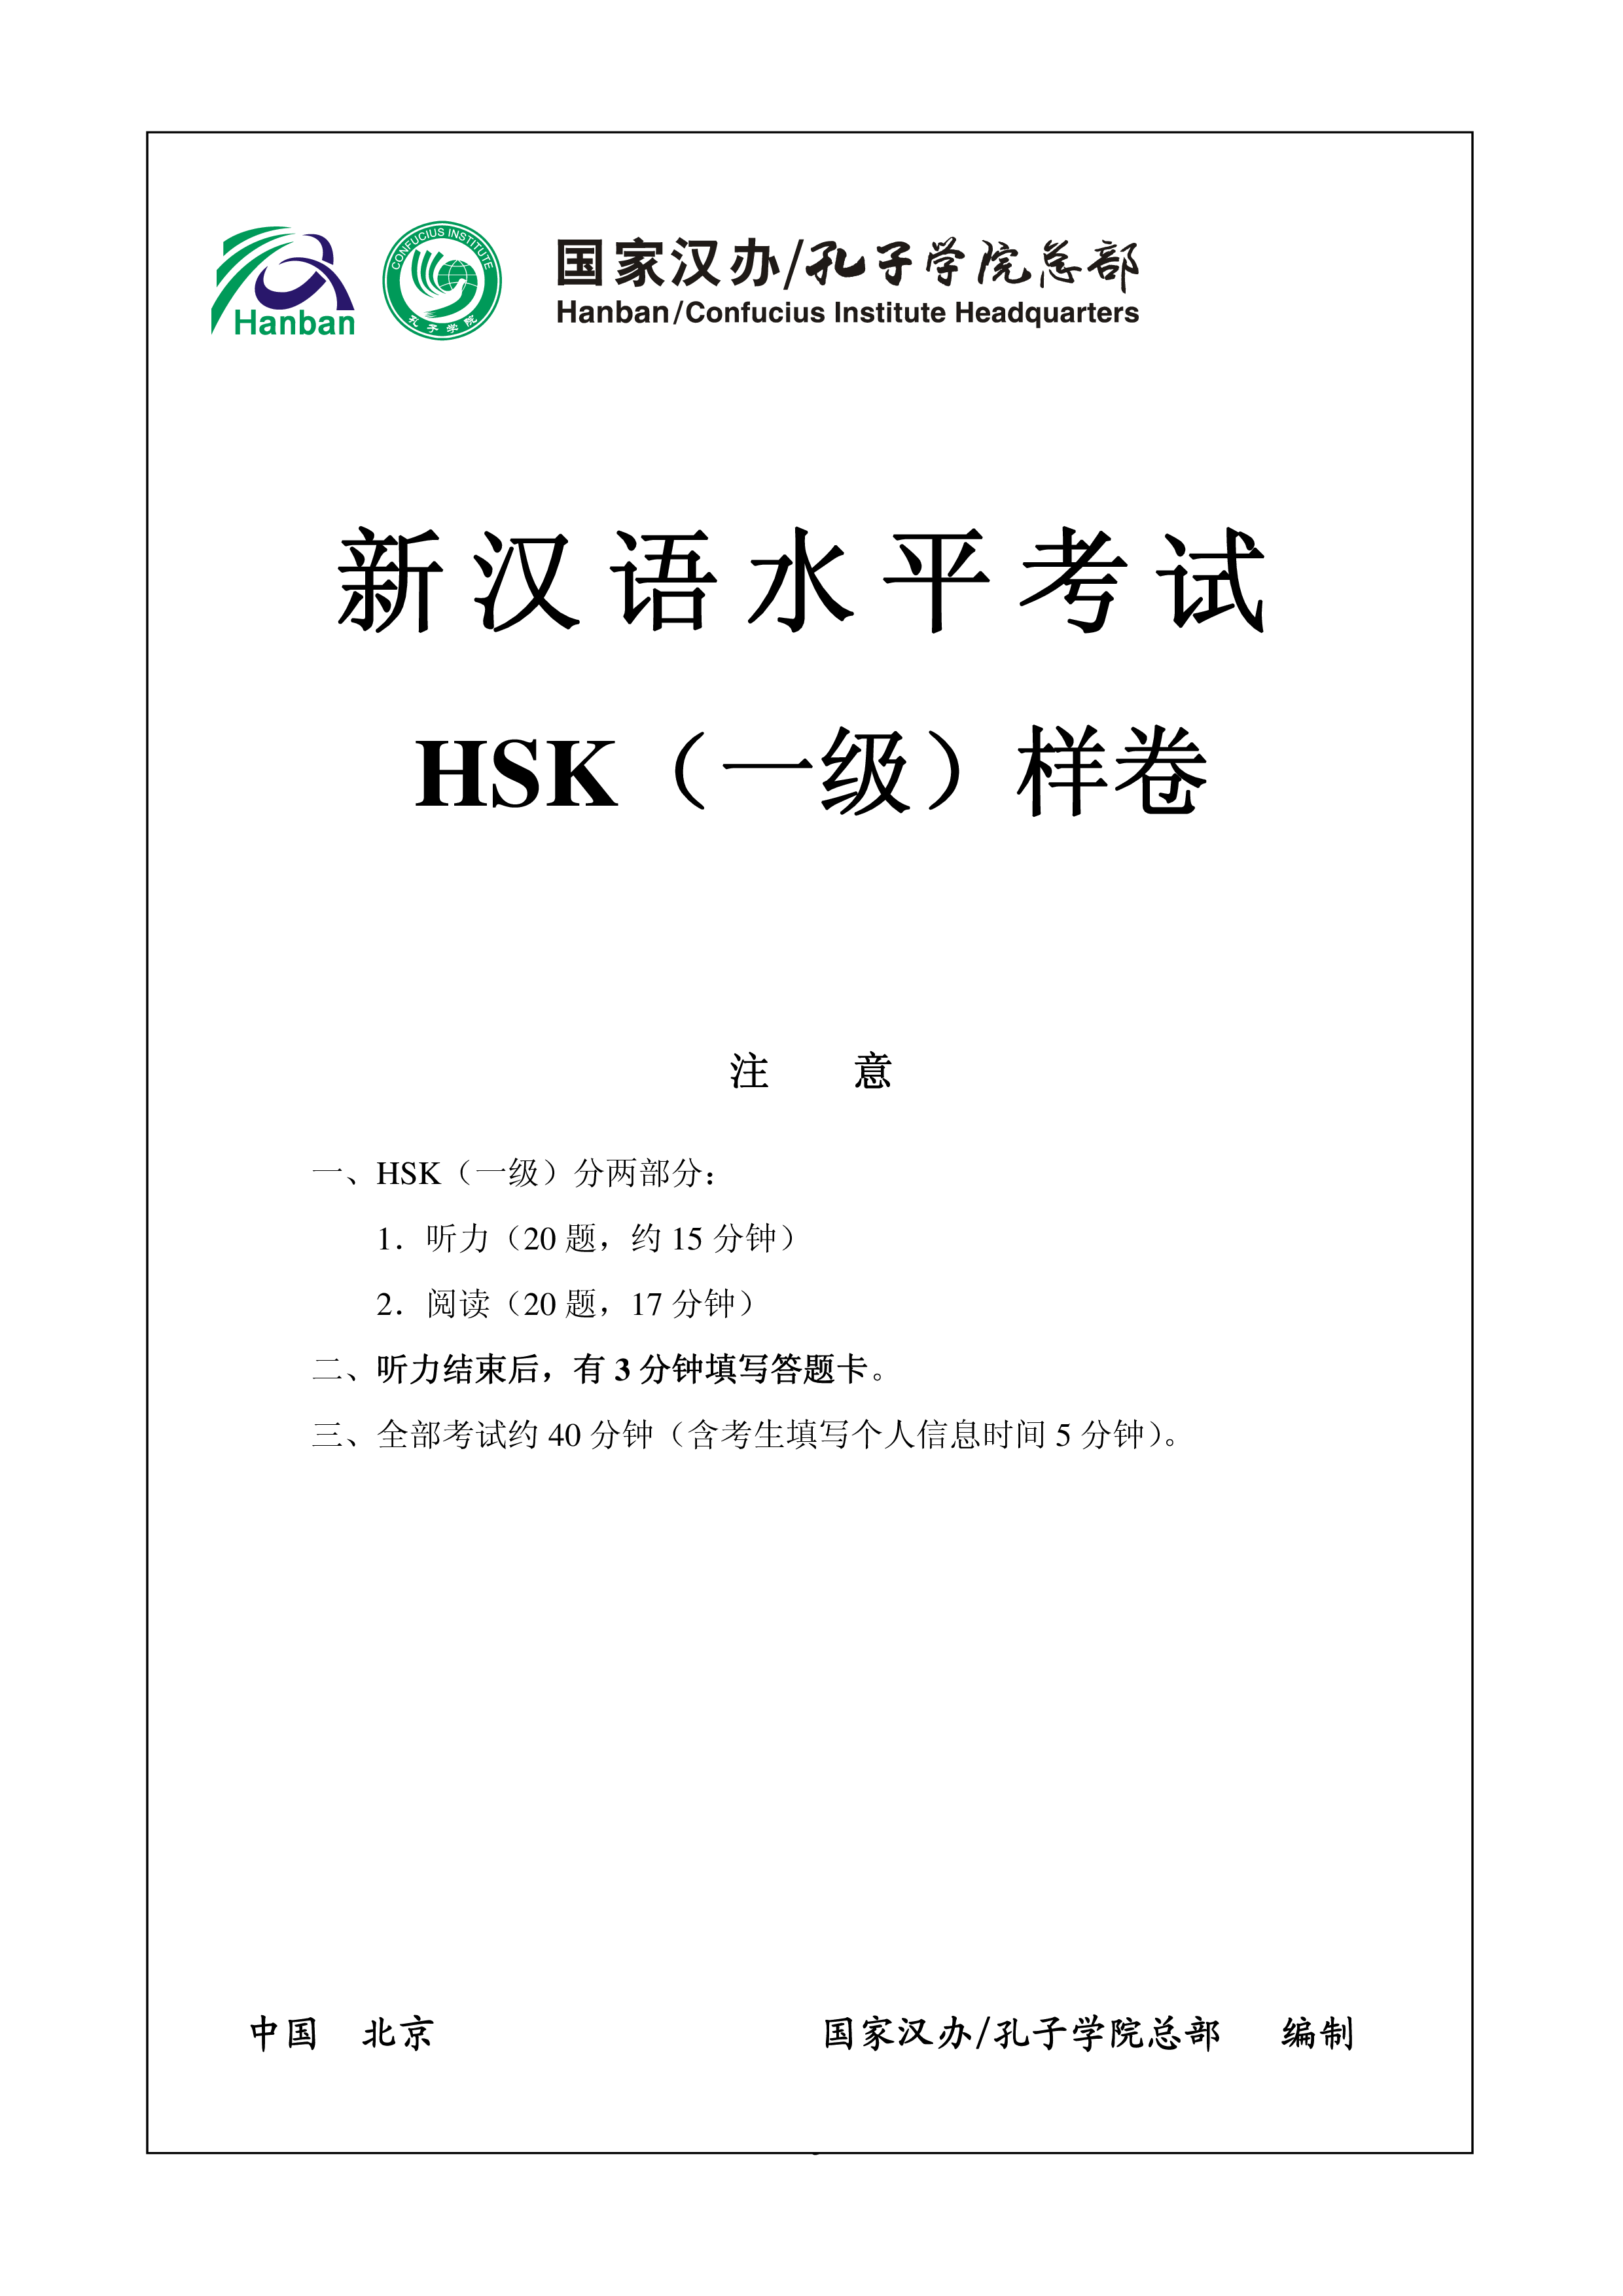 hsk1 chinese exam including answers # hsk1 1-1 plantilla imagen principal